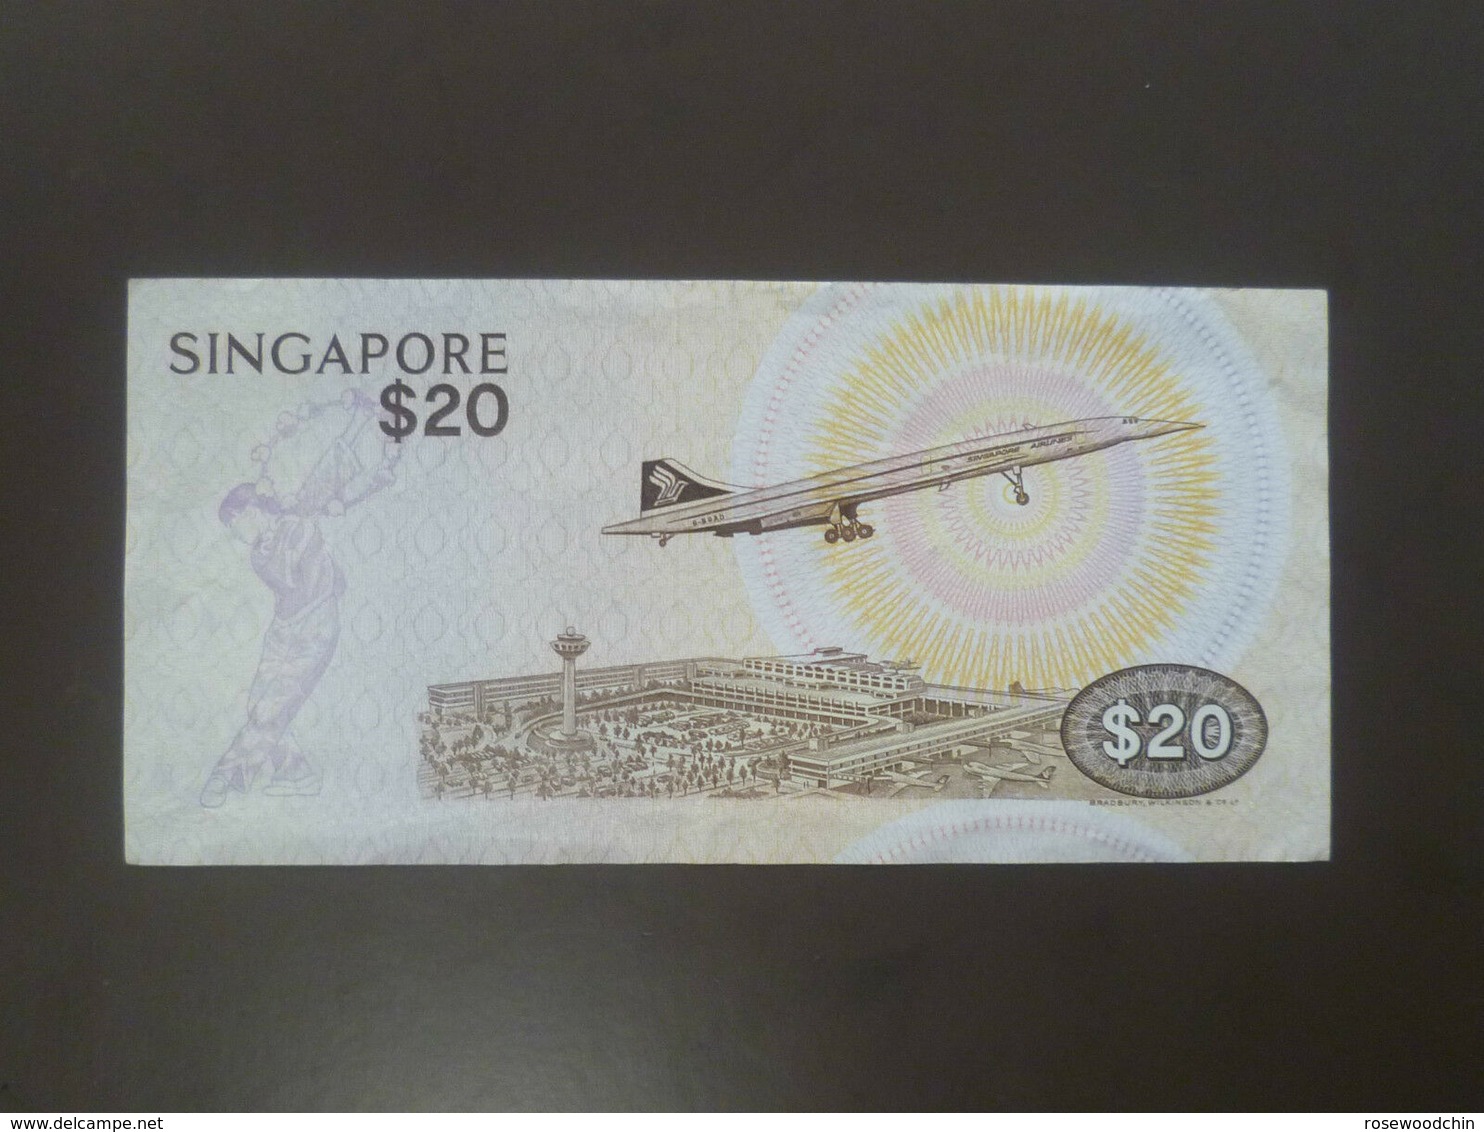 VINTAGE ! SINGAPORE $20 BIRD SERIES PAPER MONEY BANKNOTE A/79-832910 (#51A) "A" Prefix - Singapore